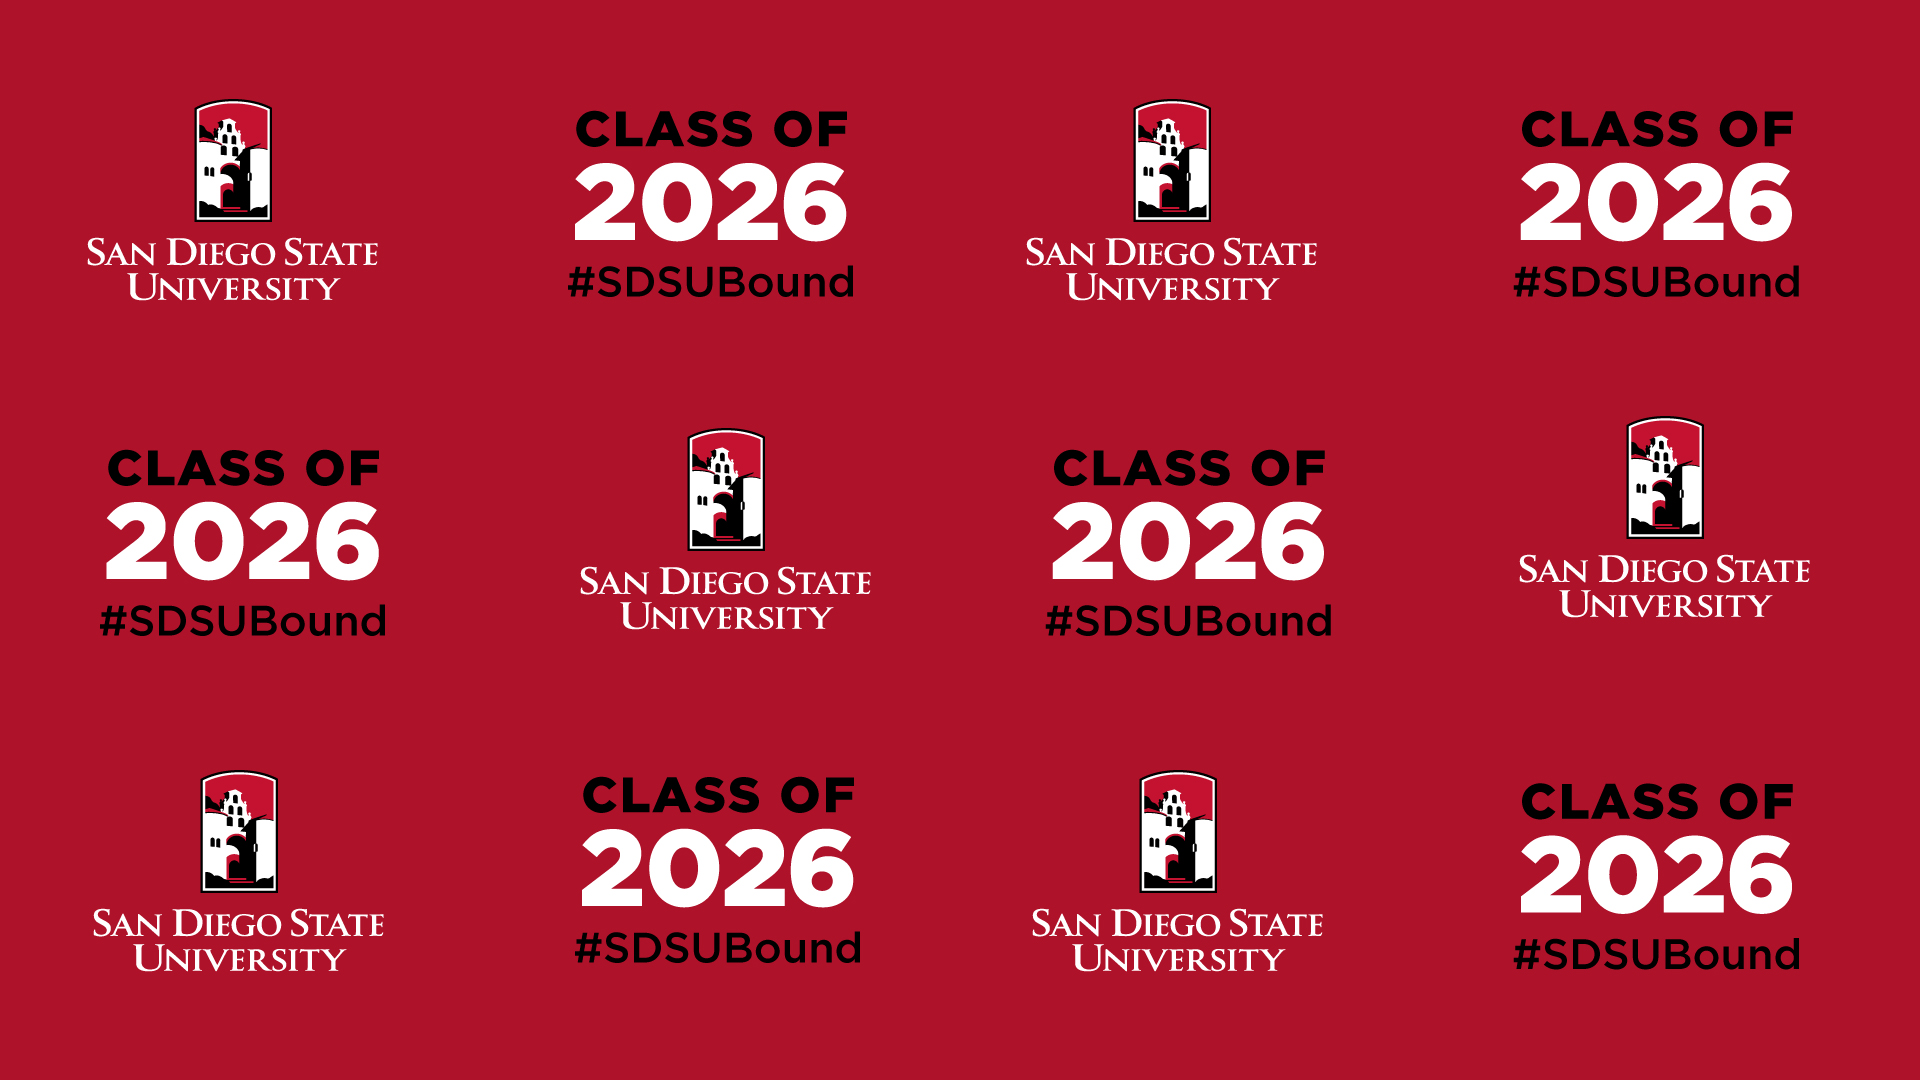 Class of 2026 #SDSUBound